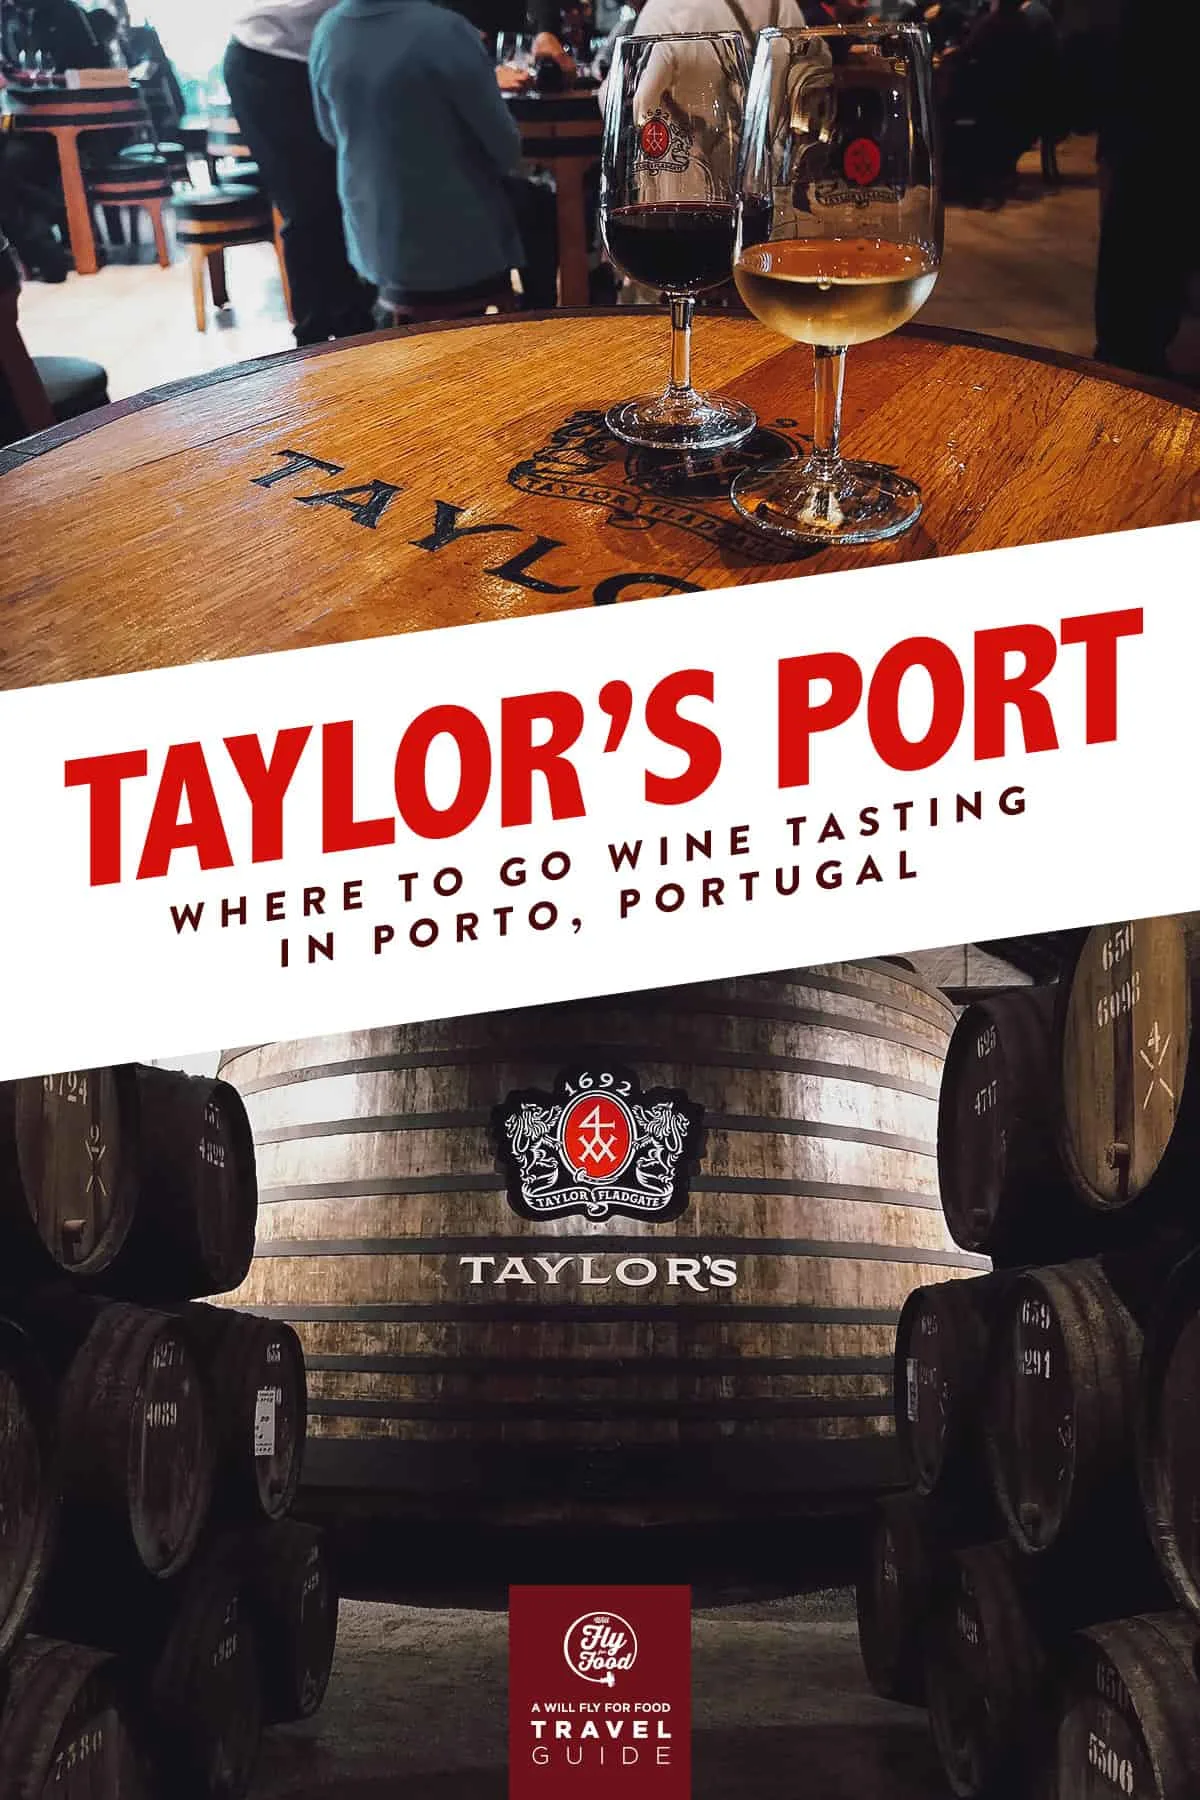 Taylor's Port Winery in Porto